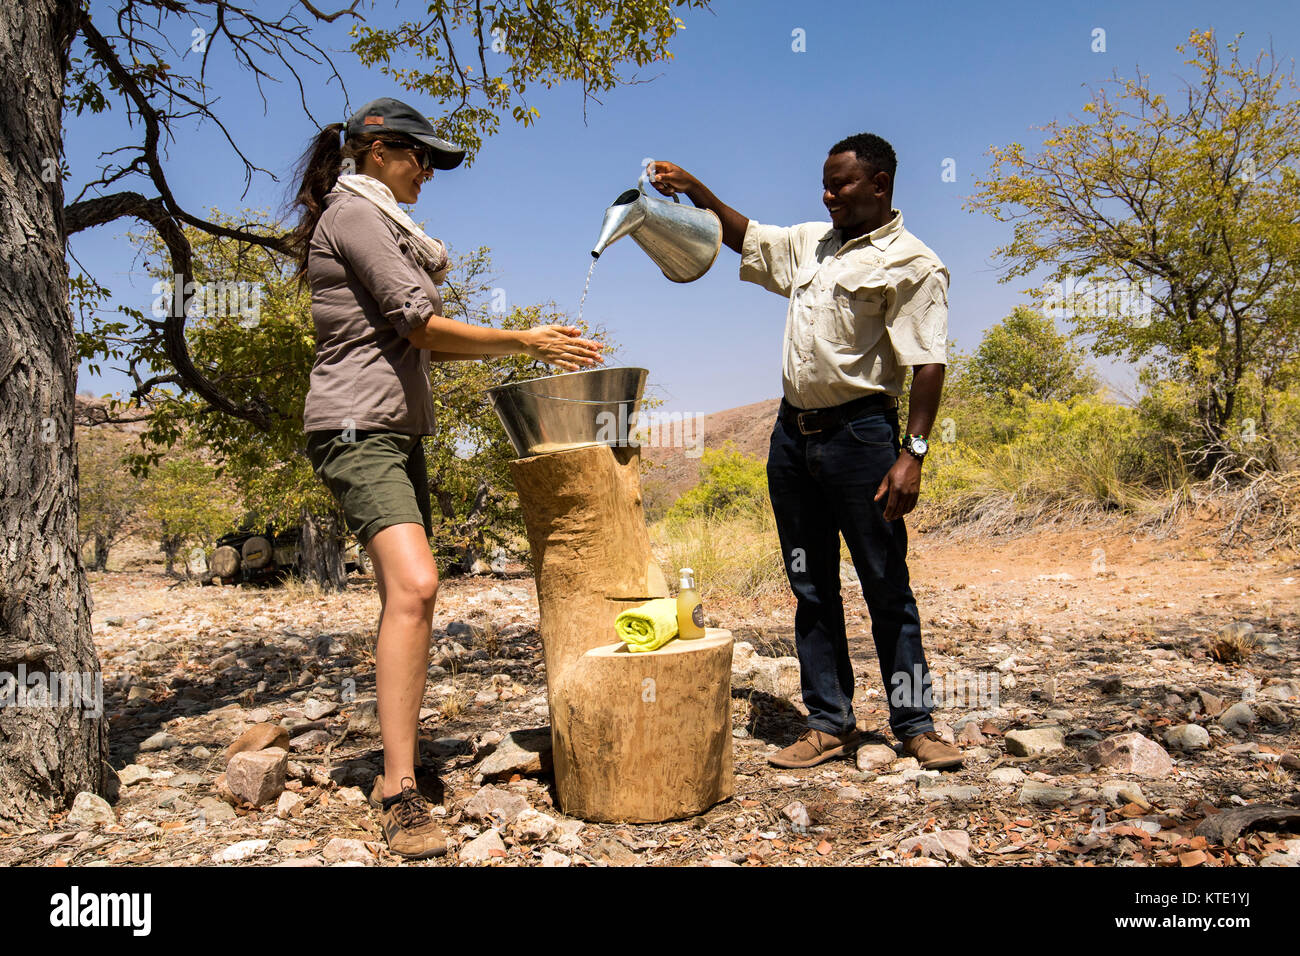 Woman washing her hands in tin basin - Huab Under Canvas, Damaraland, Namibia, Africa Stock Photo